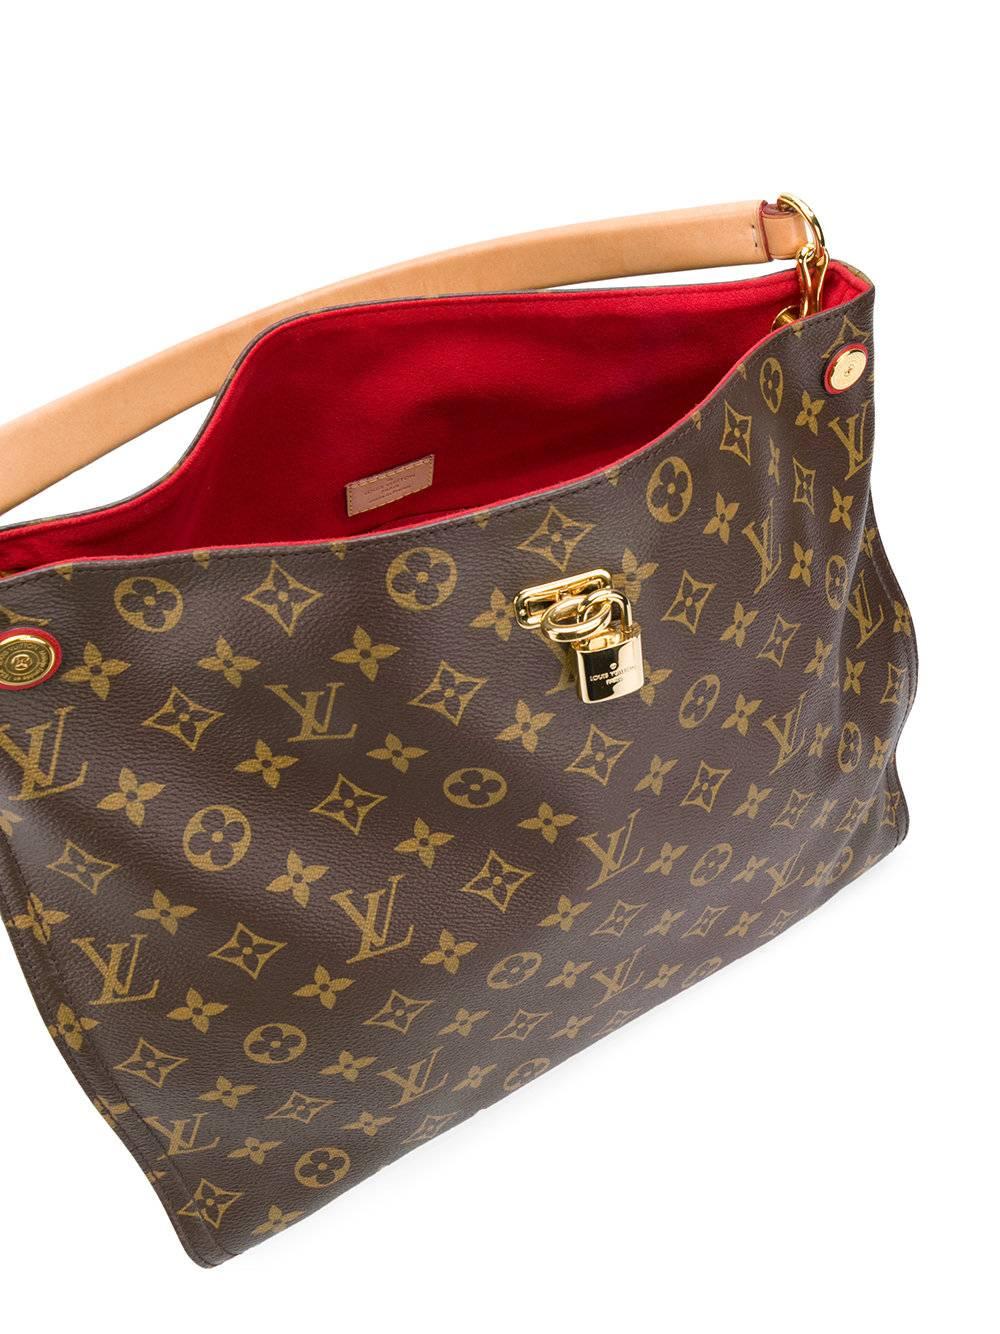 Women's Louis Vuitton Monogram Artsy Bag